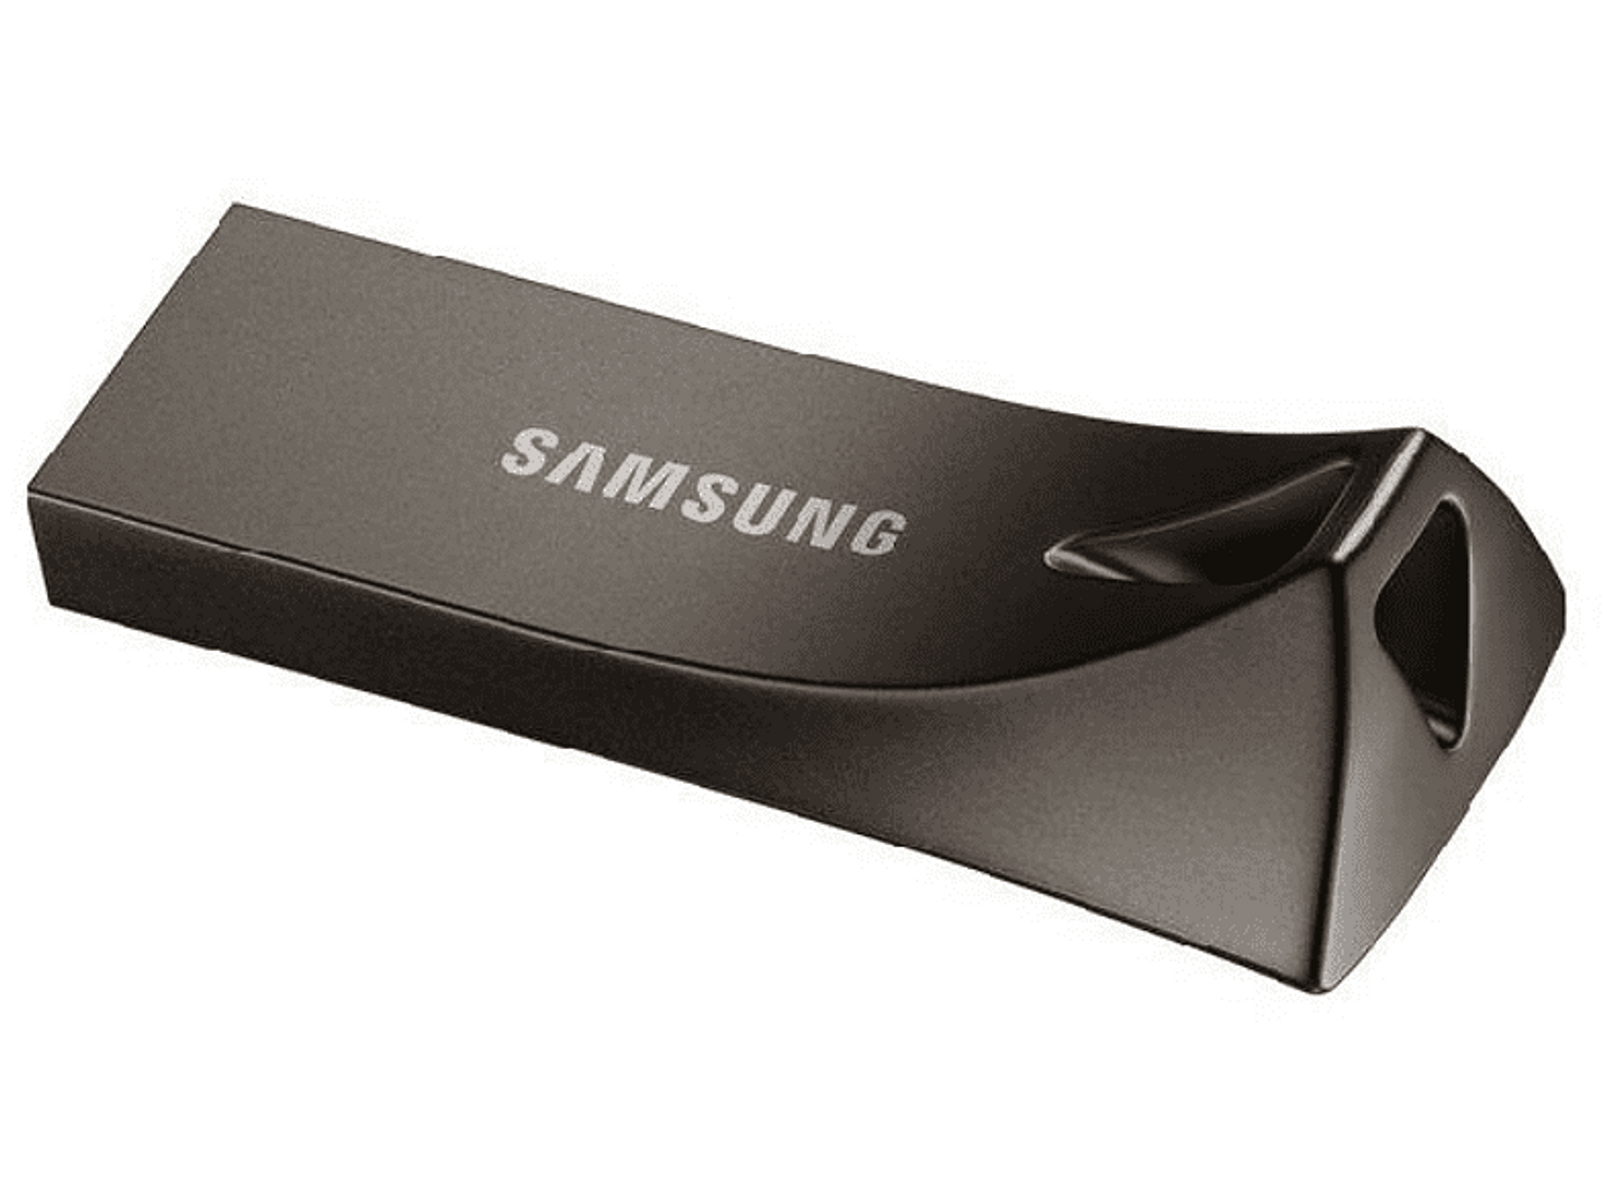 SAMSUNG MUF-128BE4/APC BAR PLUS 128GB 128 GRAY USB-Stick GB) (darkslategray, TITAN